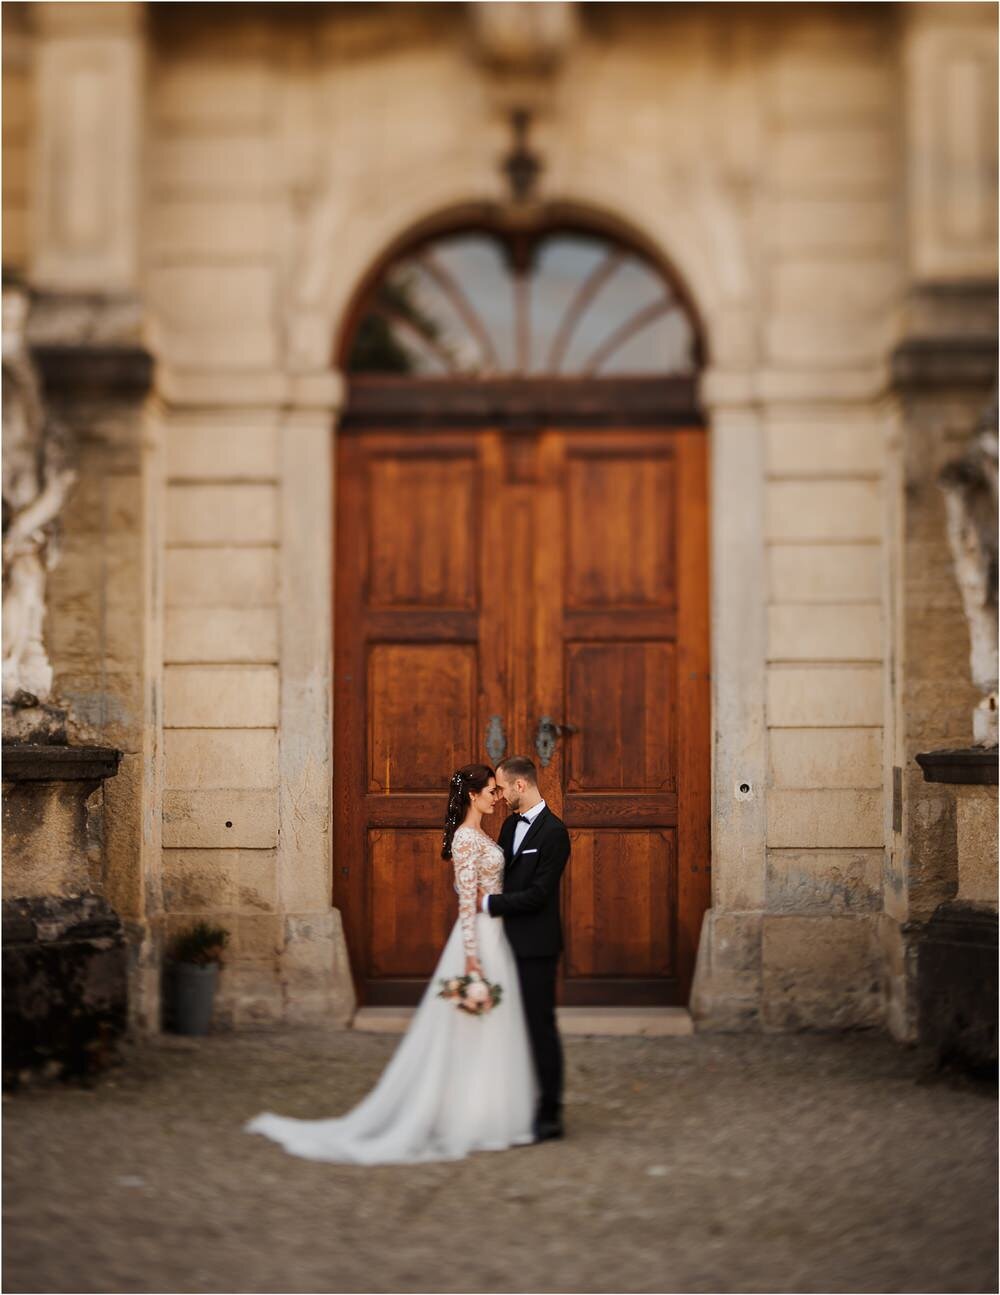 best of wedding photography 2019 photographer italy ireland tuscany santorini greece spain barcelona lake como chateux scotland destination wedding 0165.jpg